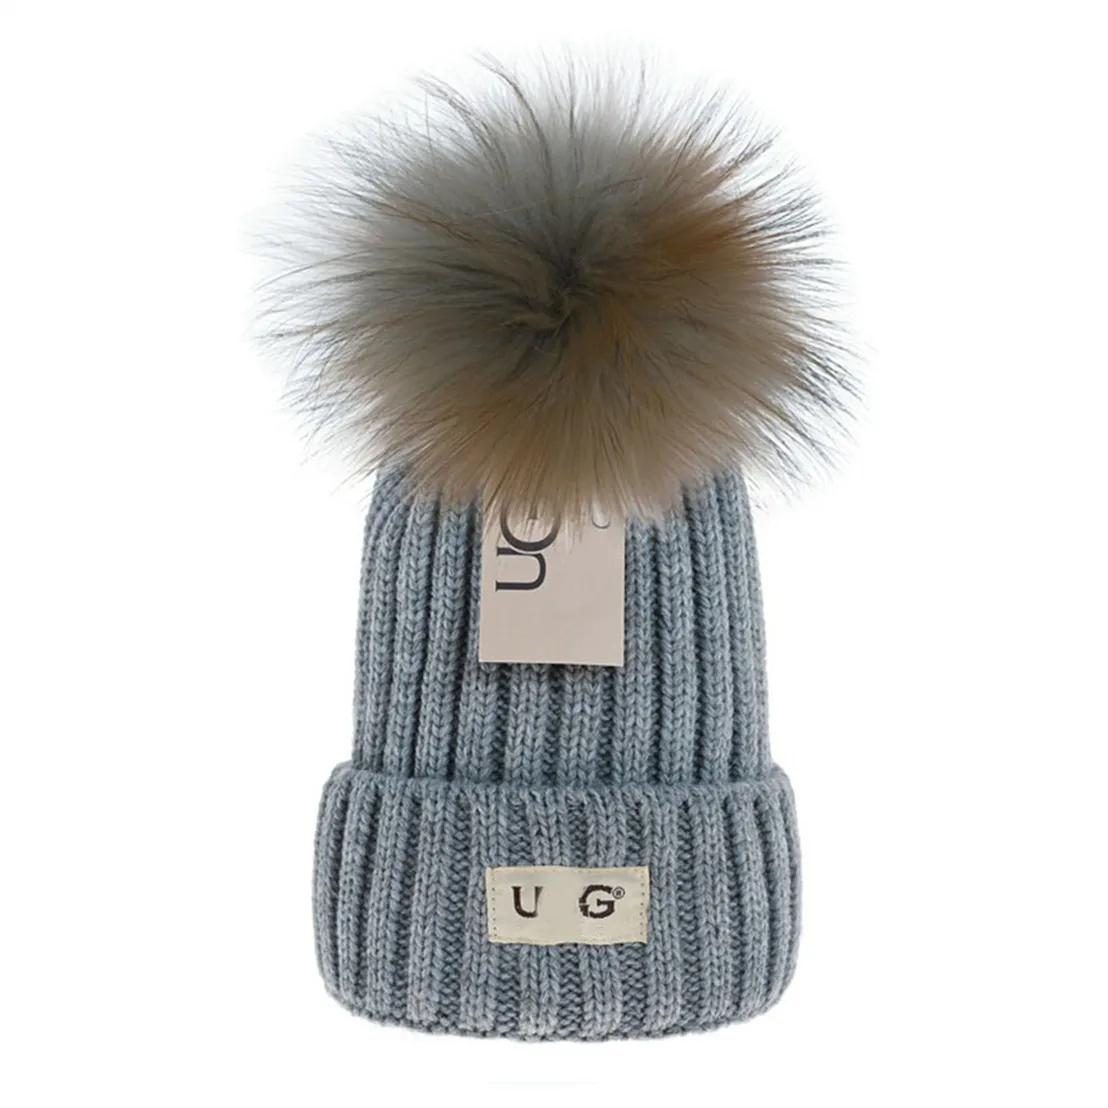 Nova moda popular chapéu de malha gorro de luxo inverno unissex lã misturada chapéus G-10